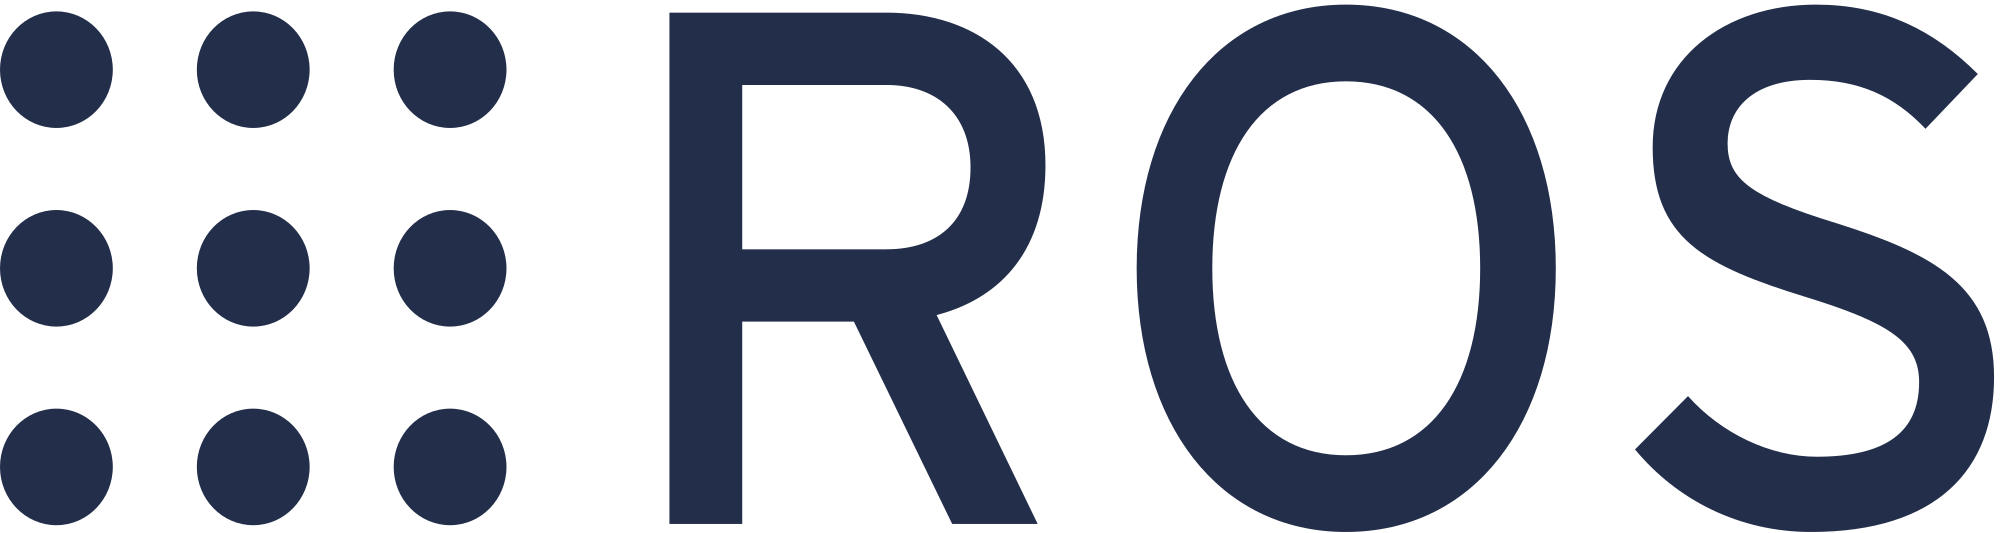 Ros Logo - File:Ros logo.svg - Wikimedia Commons